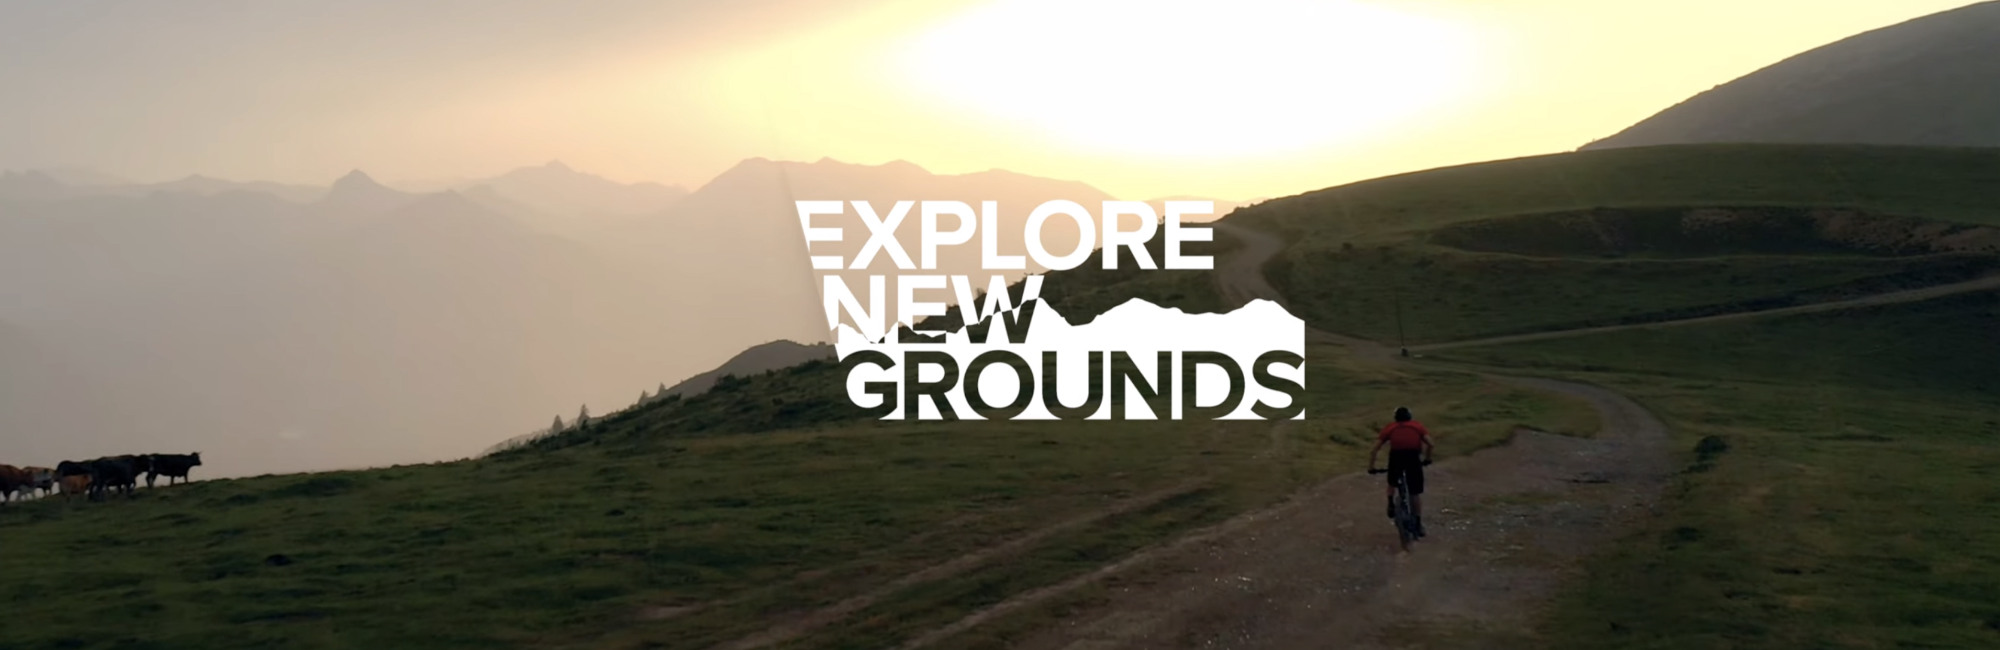 explore new grounds